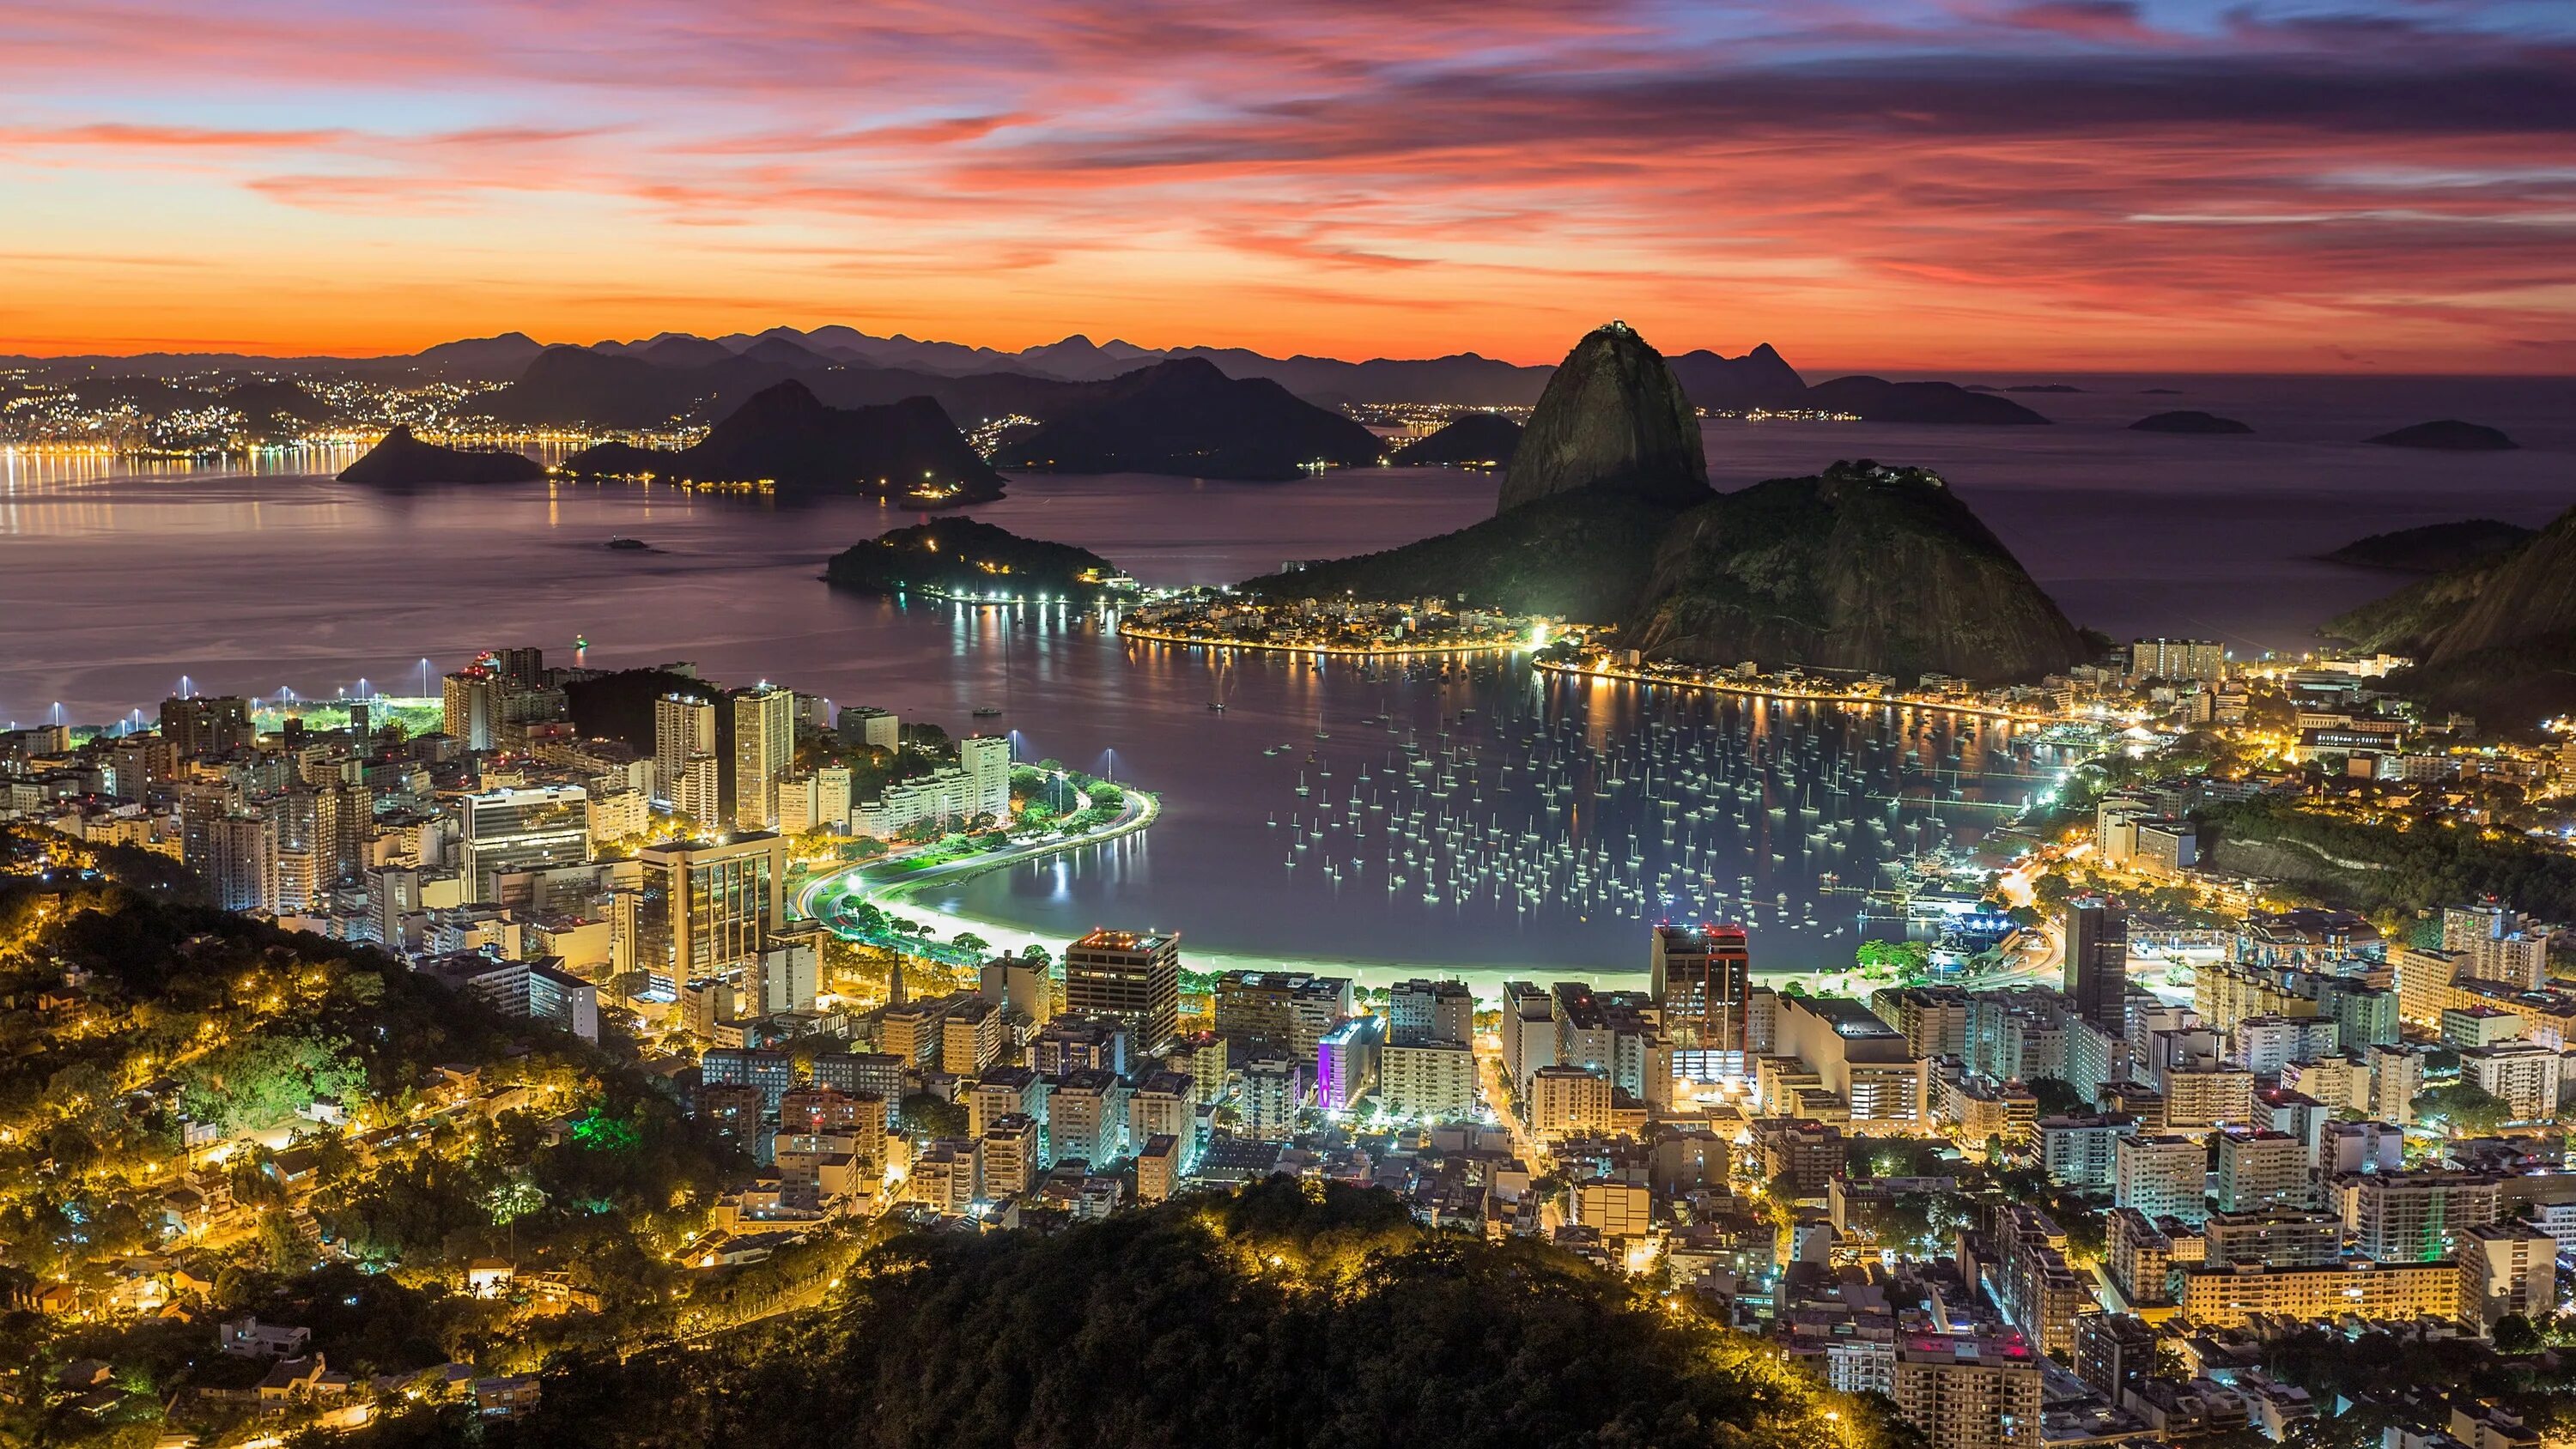 Бразилия Рио де Жанейро. Рио-де-Жанейро столица Бразилии. Панорама Рио де Жанейро. Бразилия Рио дажанейро. Все о бразилии